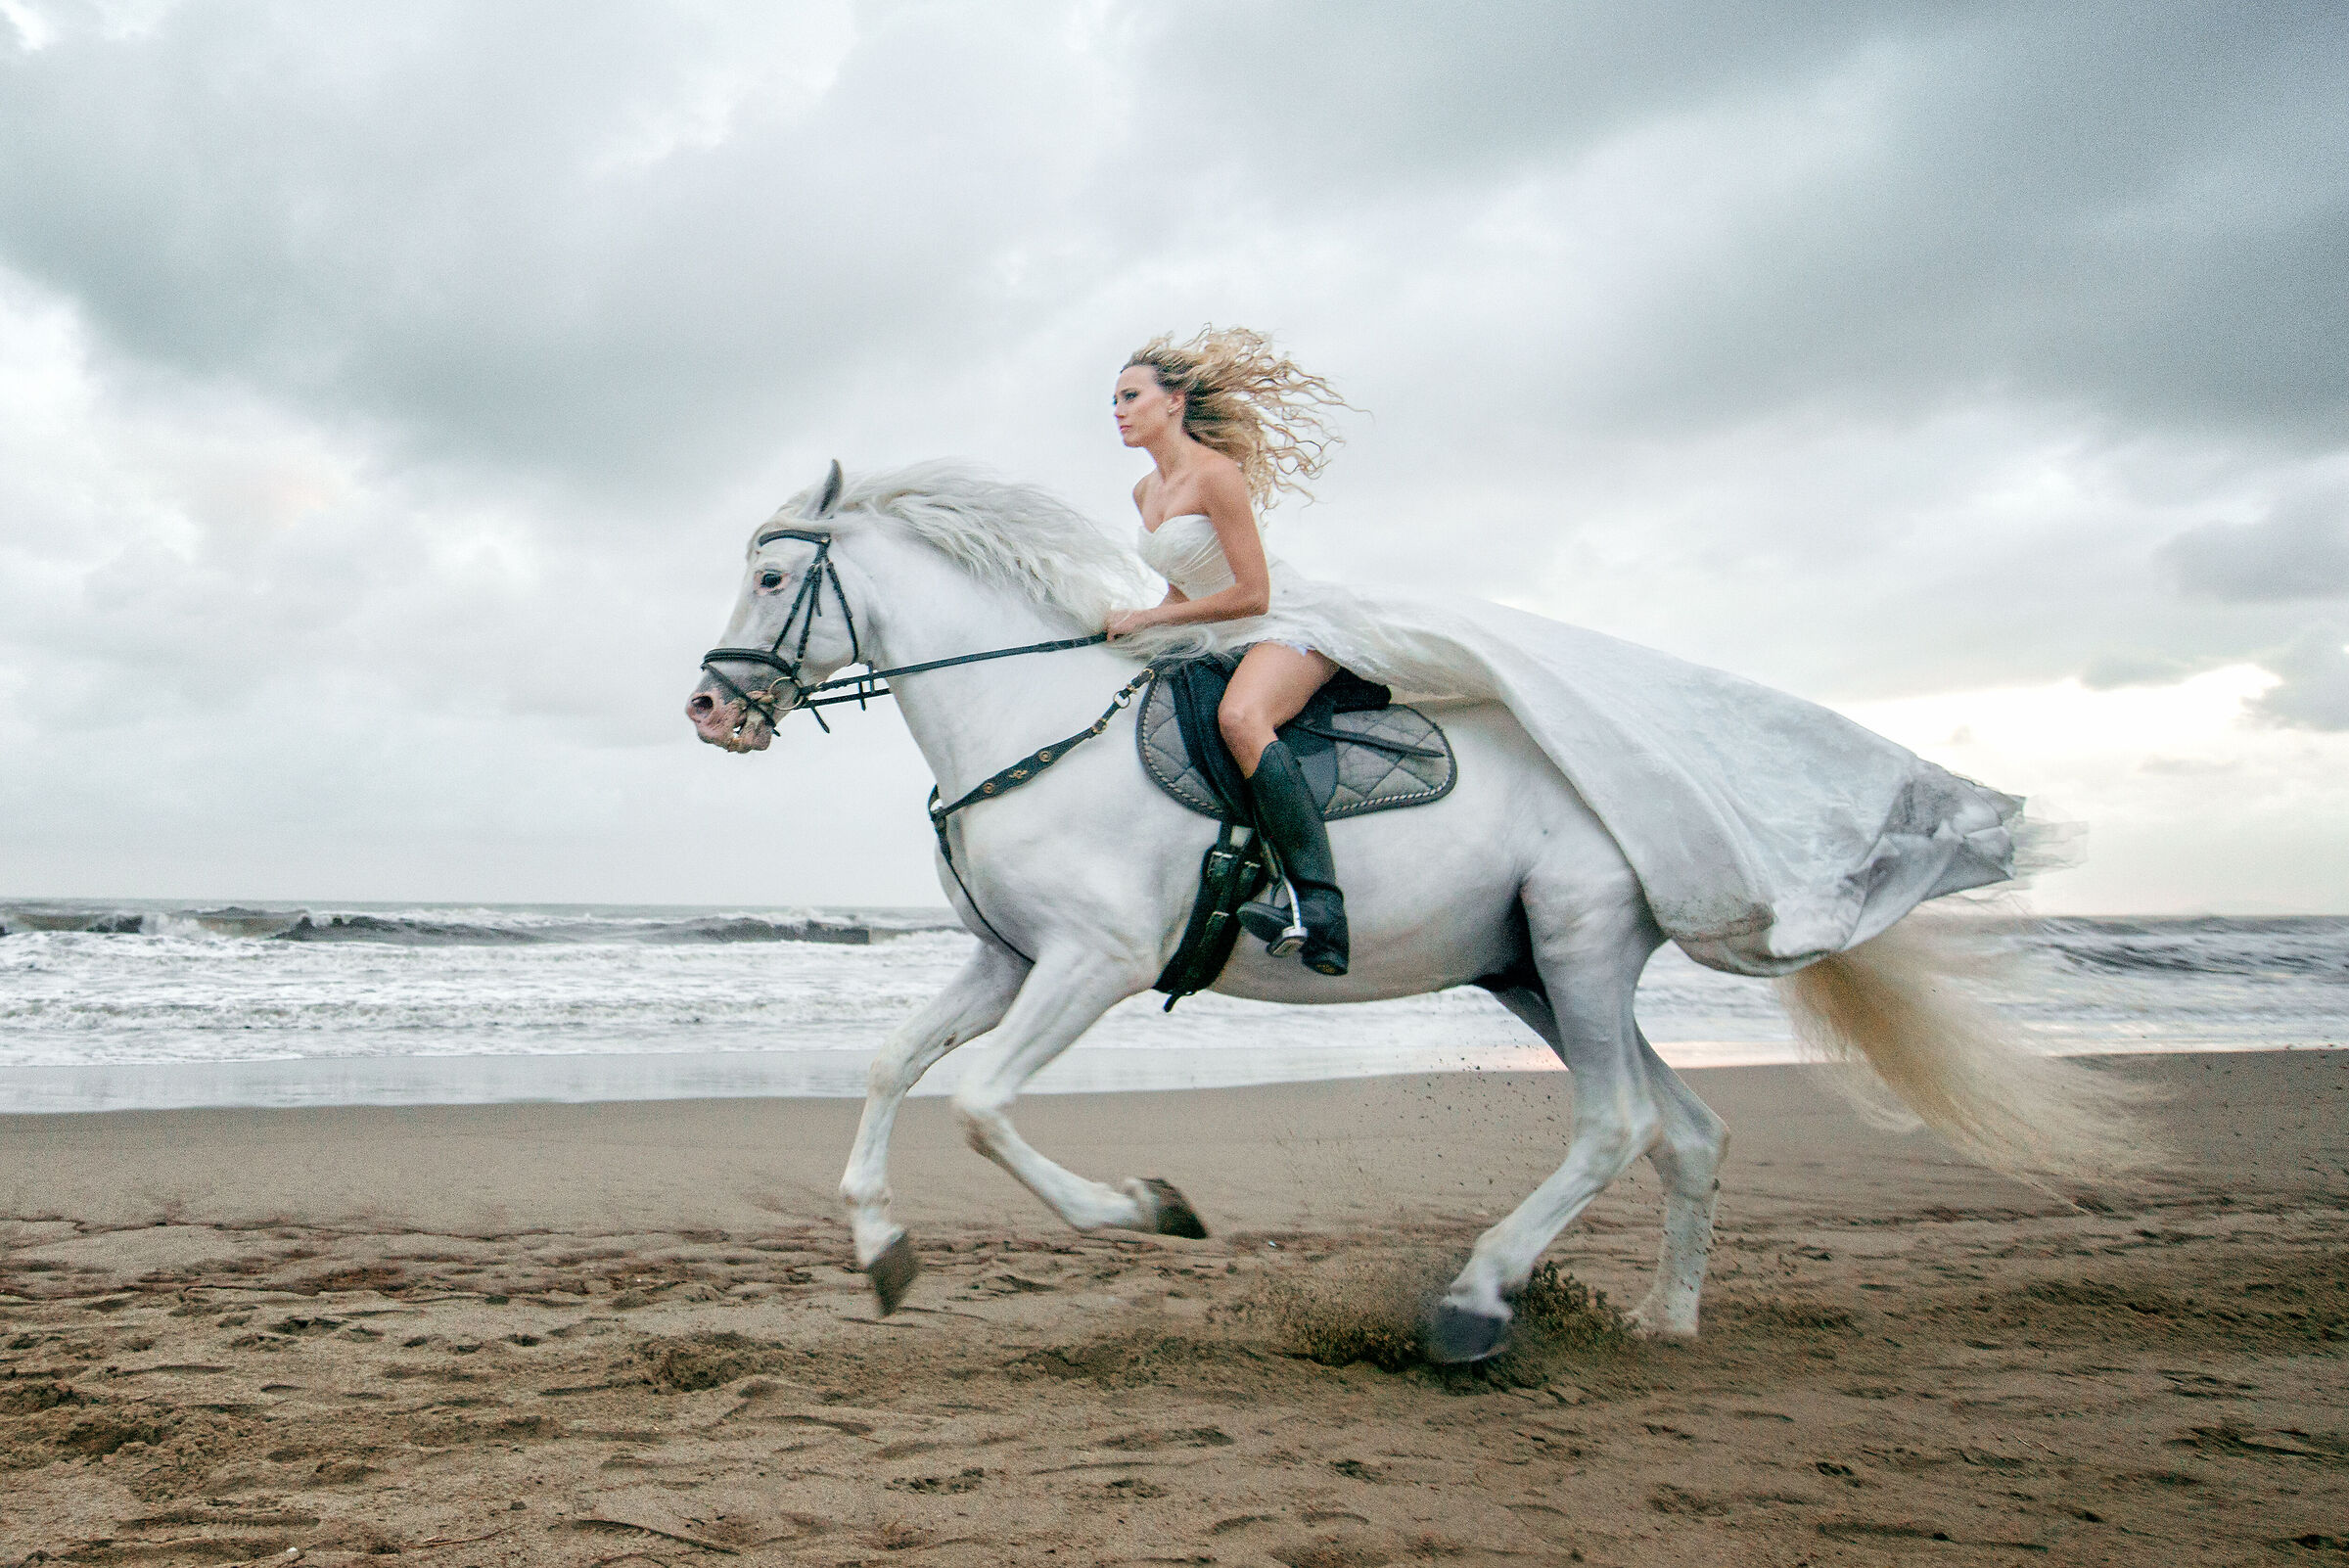 Проскачу на коне. Девушка на коне. Фотосессия с белой лошадью. Девушка скачет на коне. Девушка с лошадью.